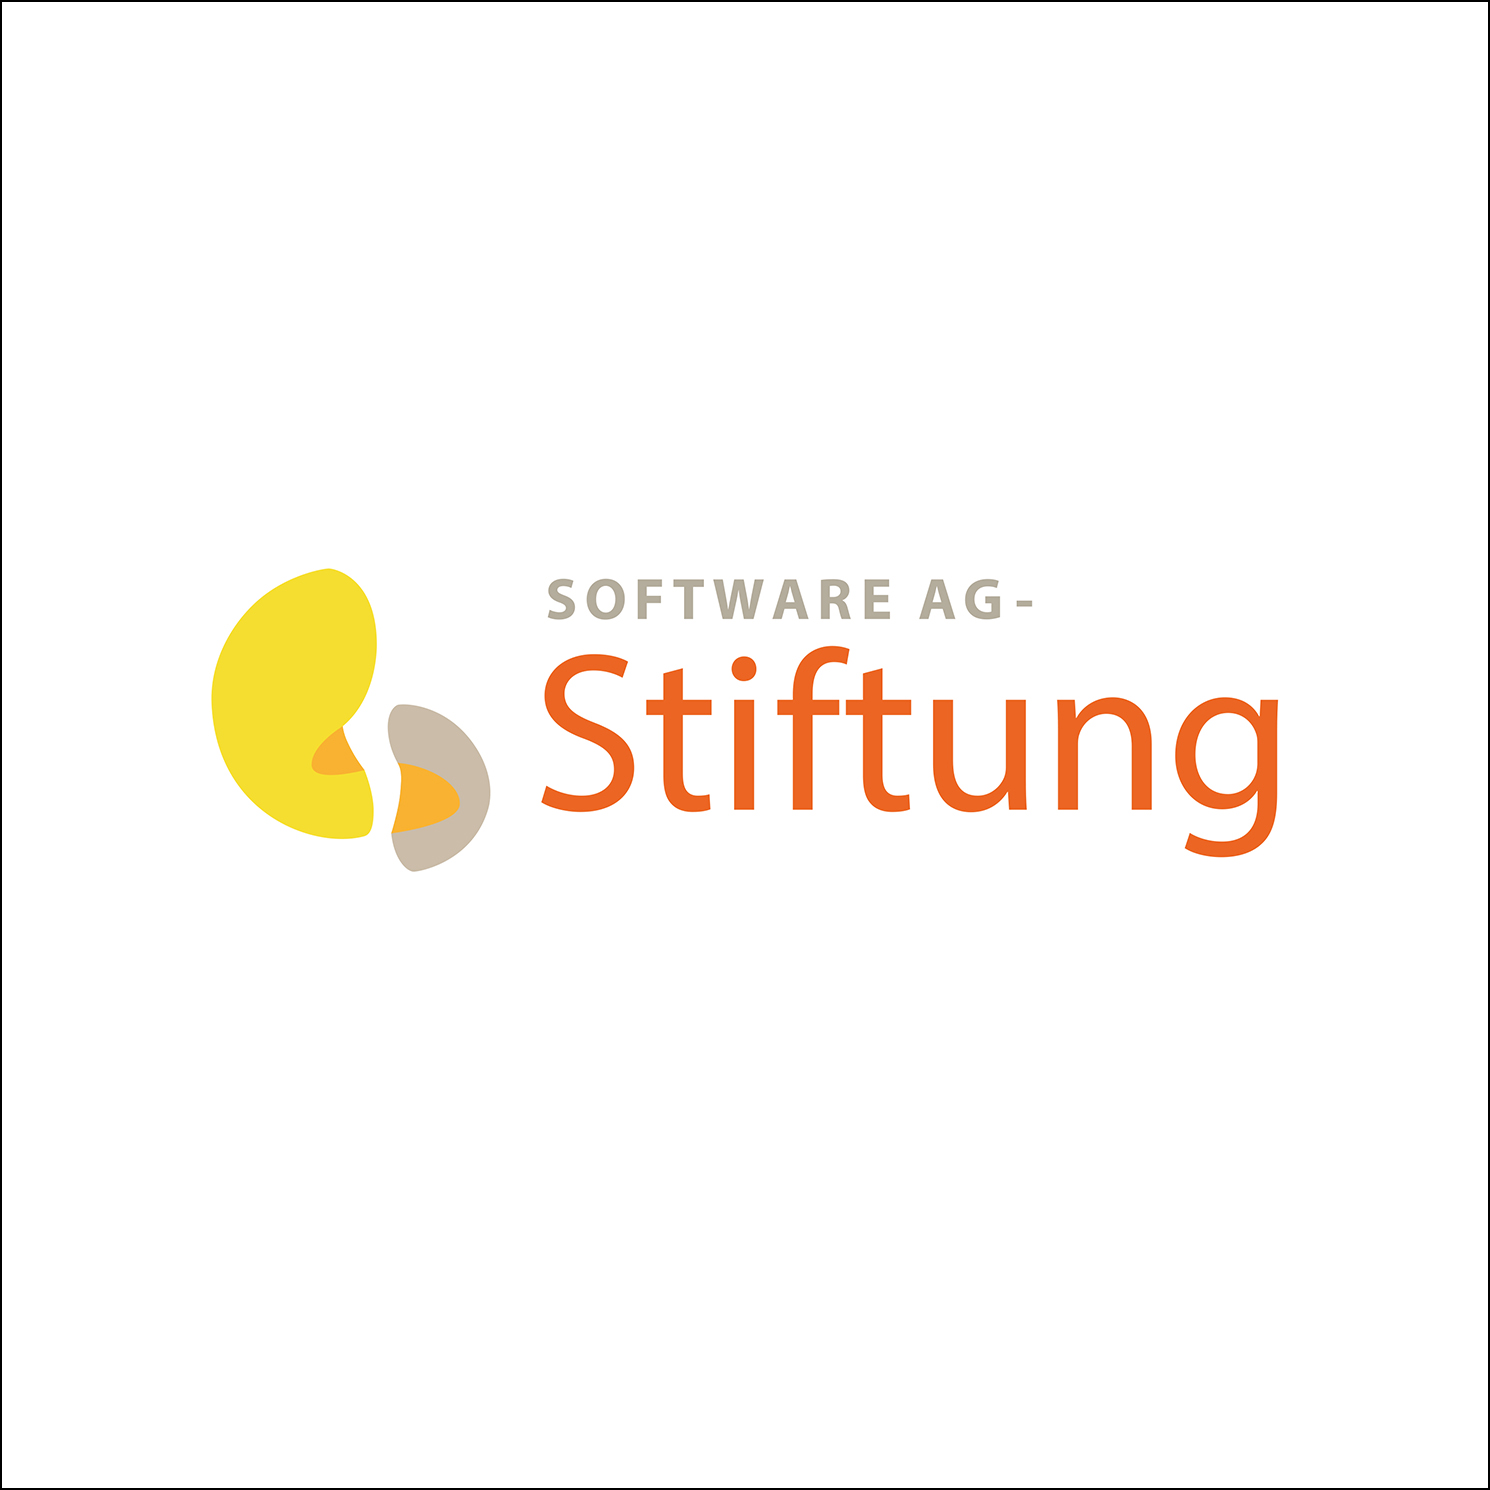  Software AG – Stiftung (SAGST)